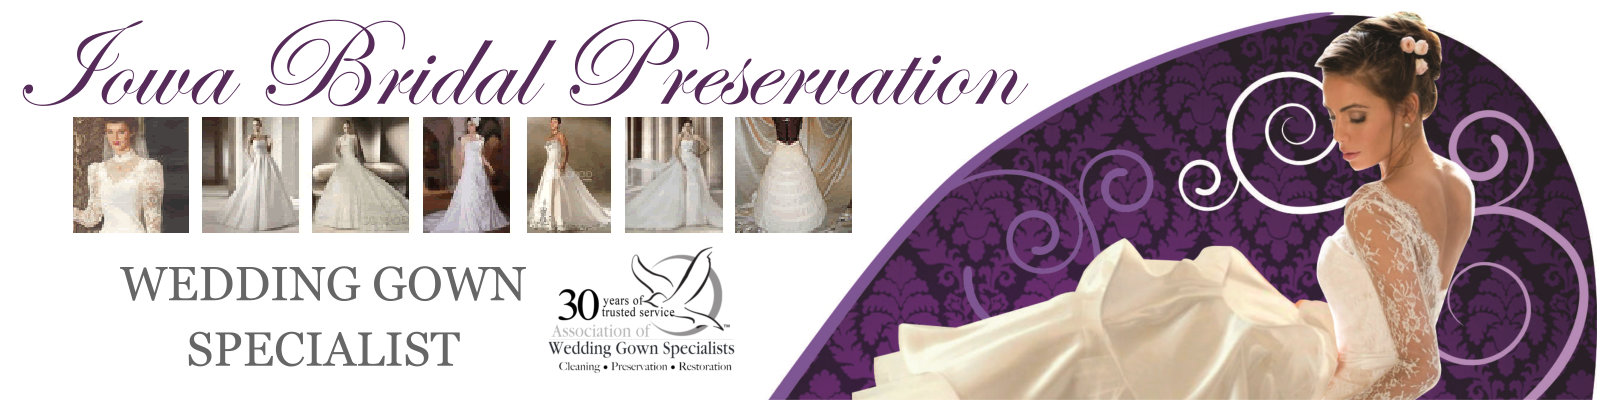 Petticoats - Iowa Bridal Preservation